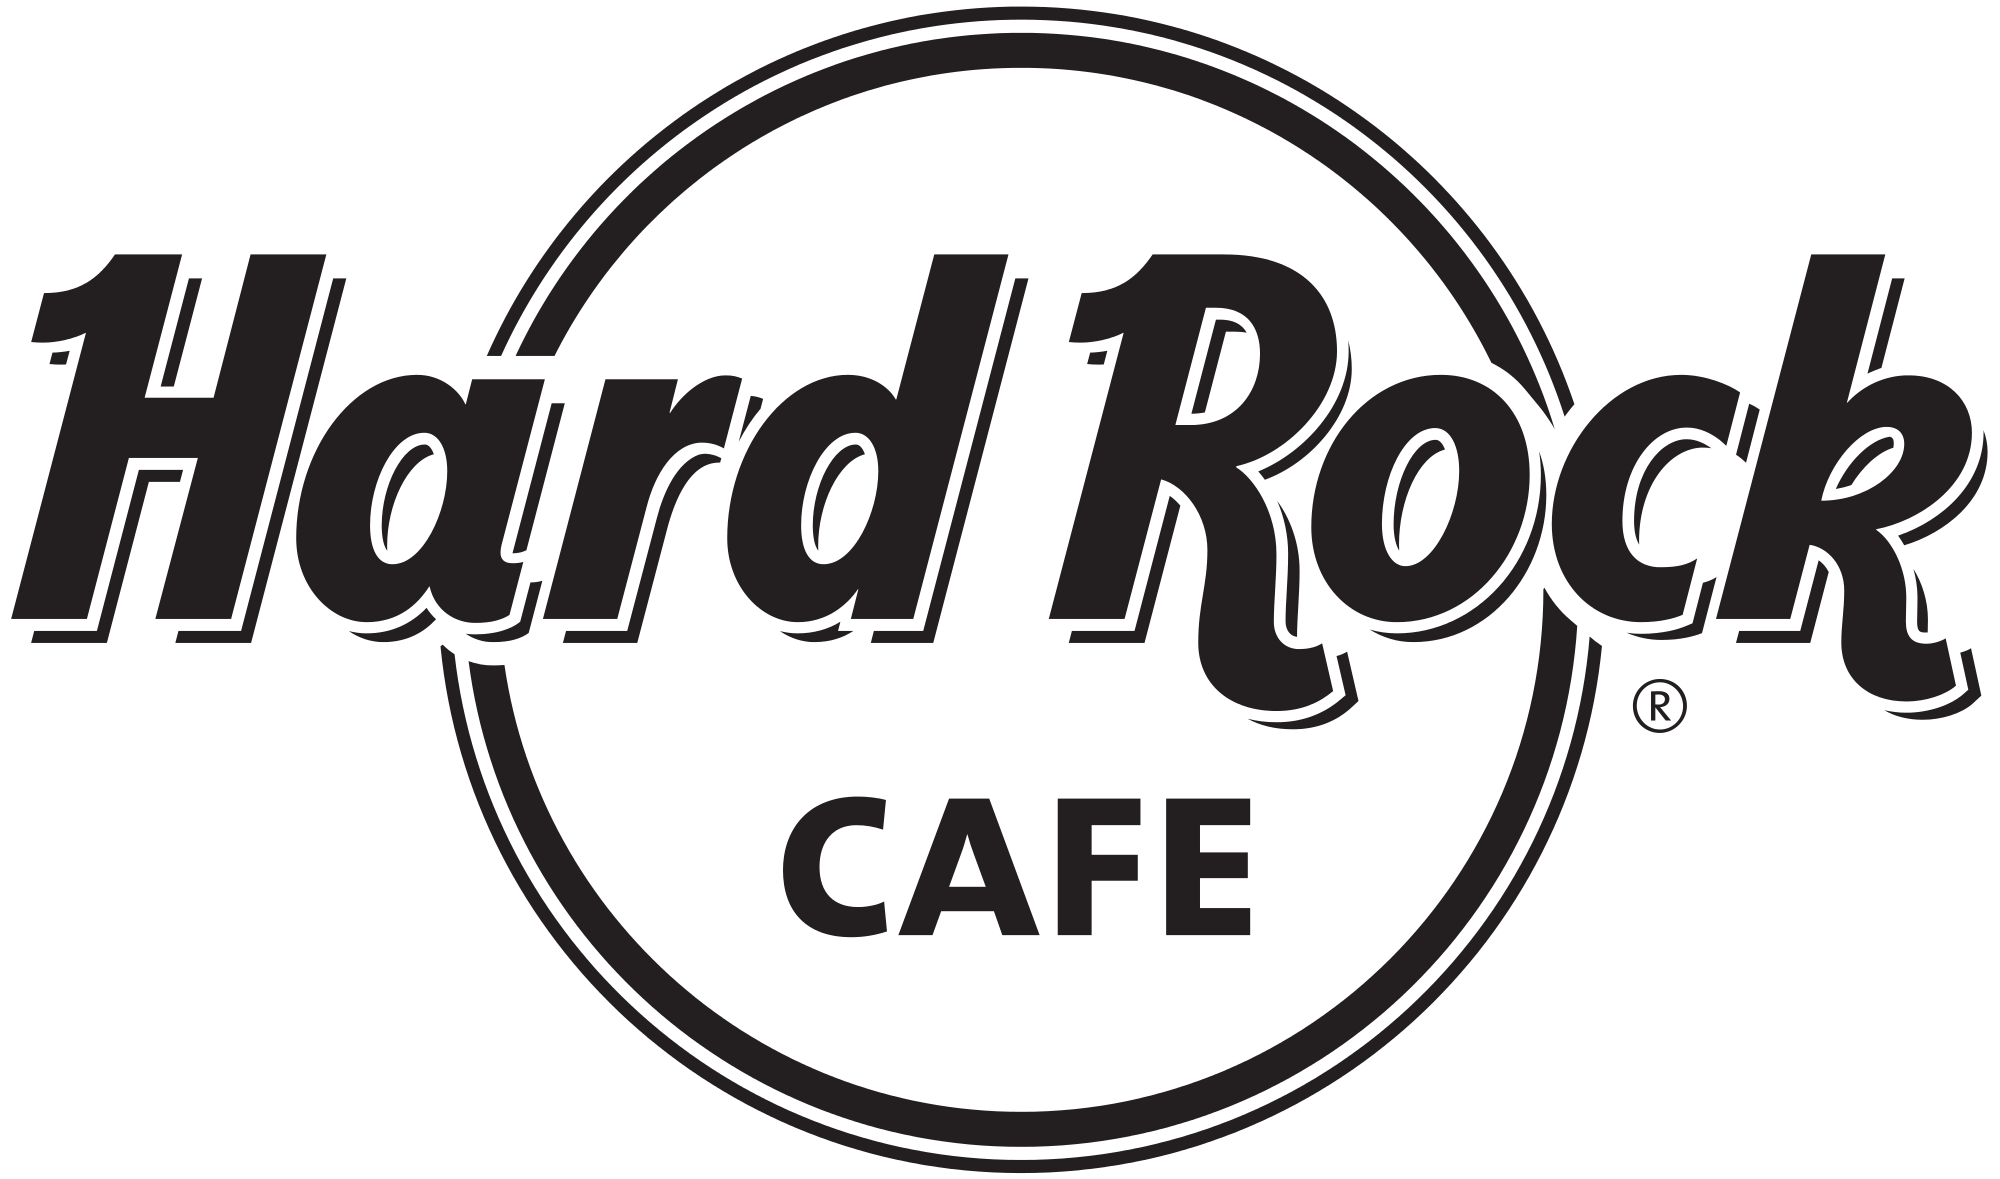 Hard Rock Café Logo Black and White transparent PNG.